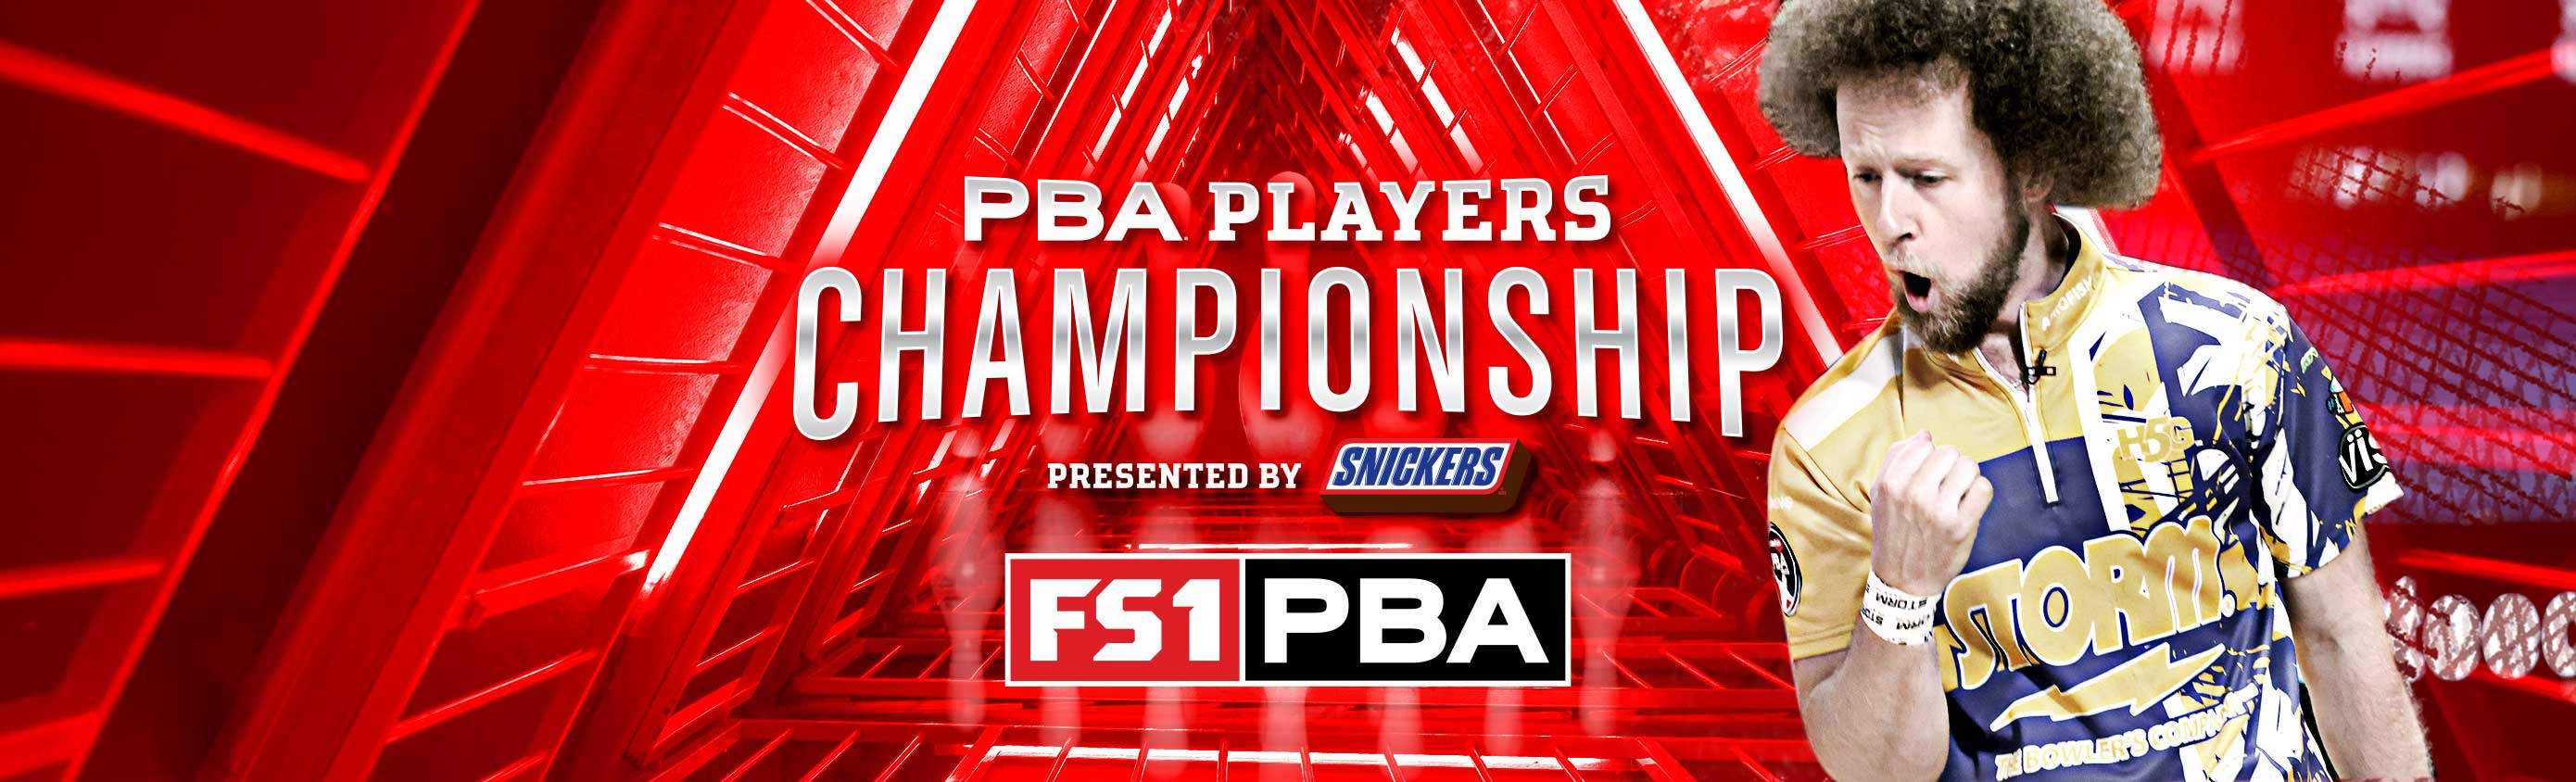 PBA Players Championship